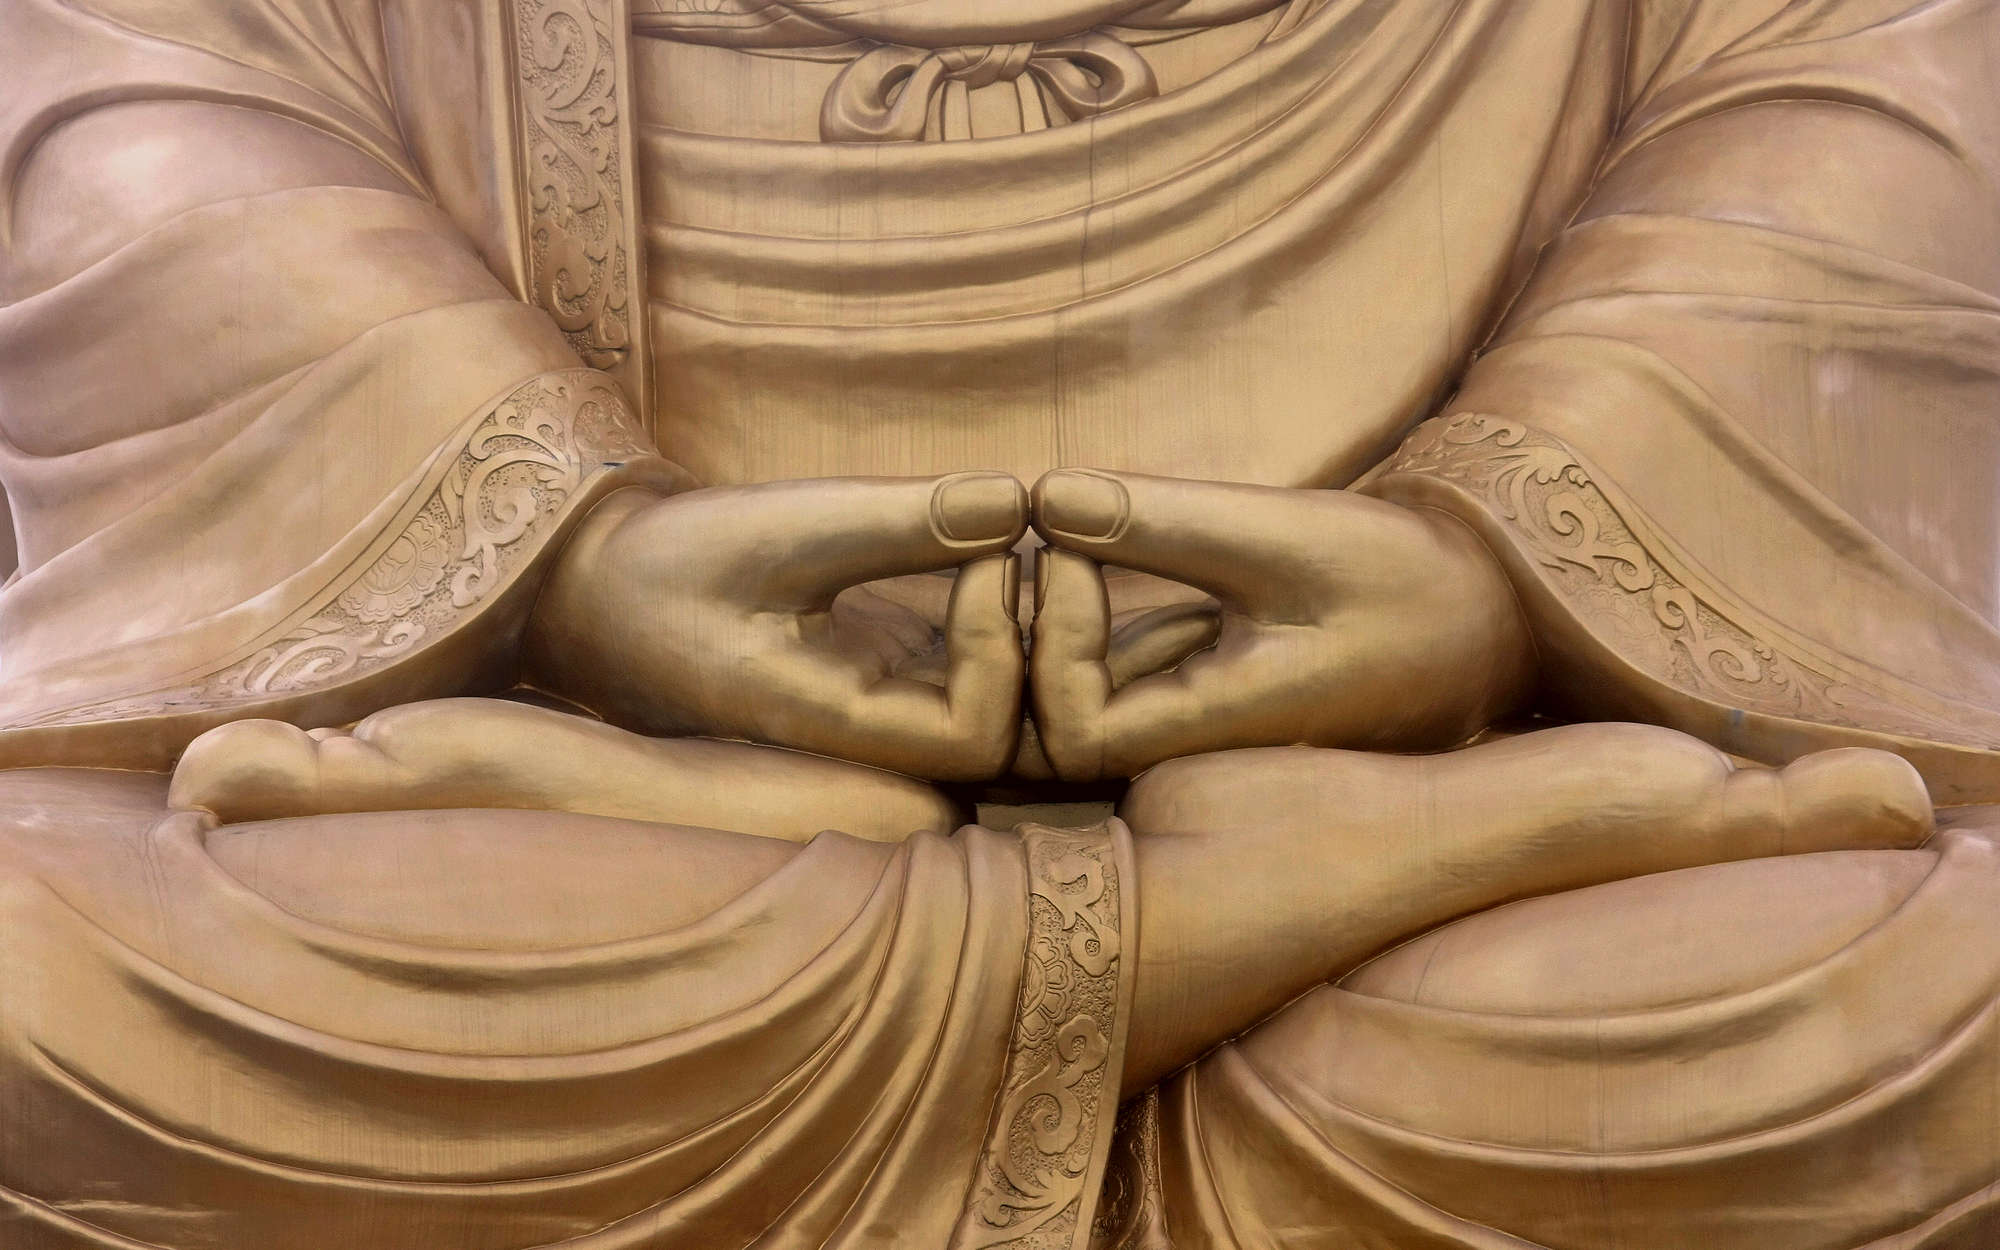             Digital behang Religie Boeddhabeeld - Strukturenvlies
        